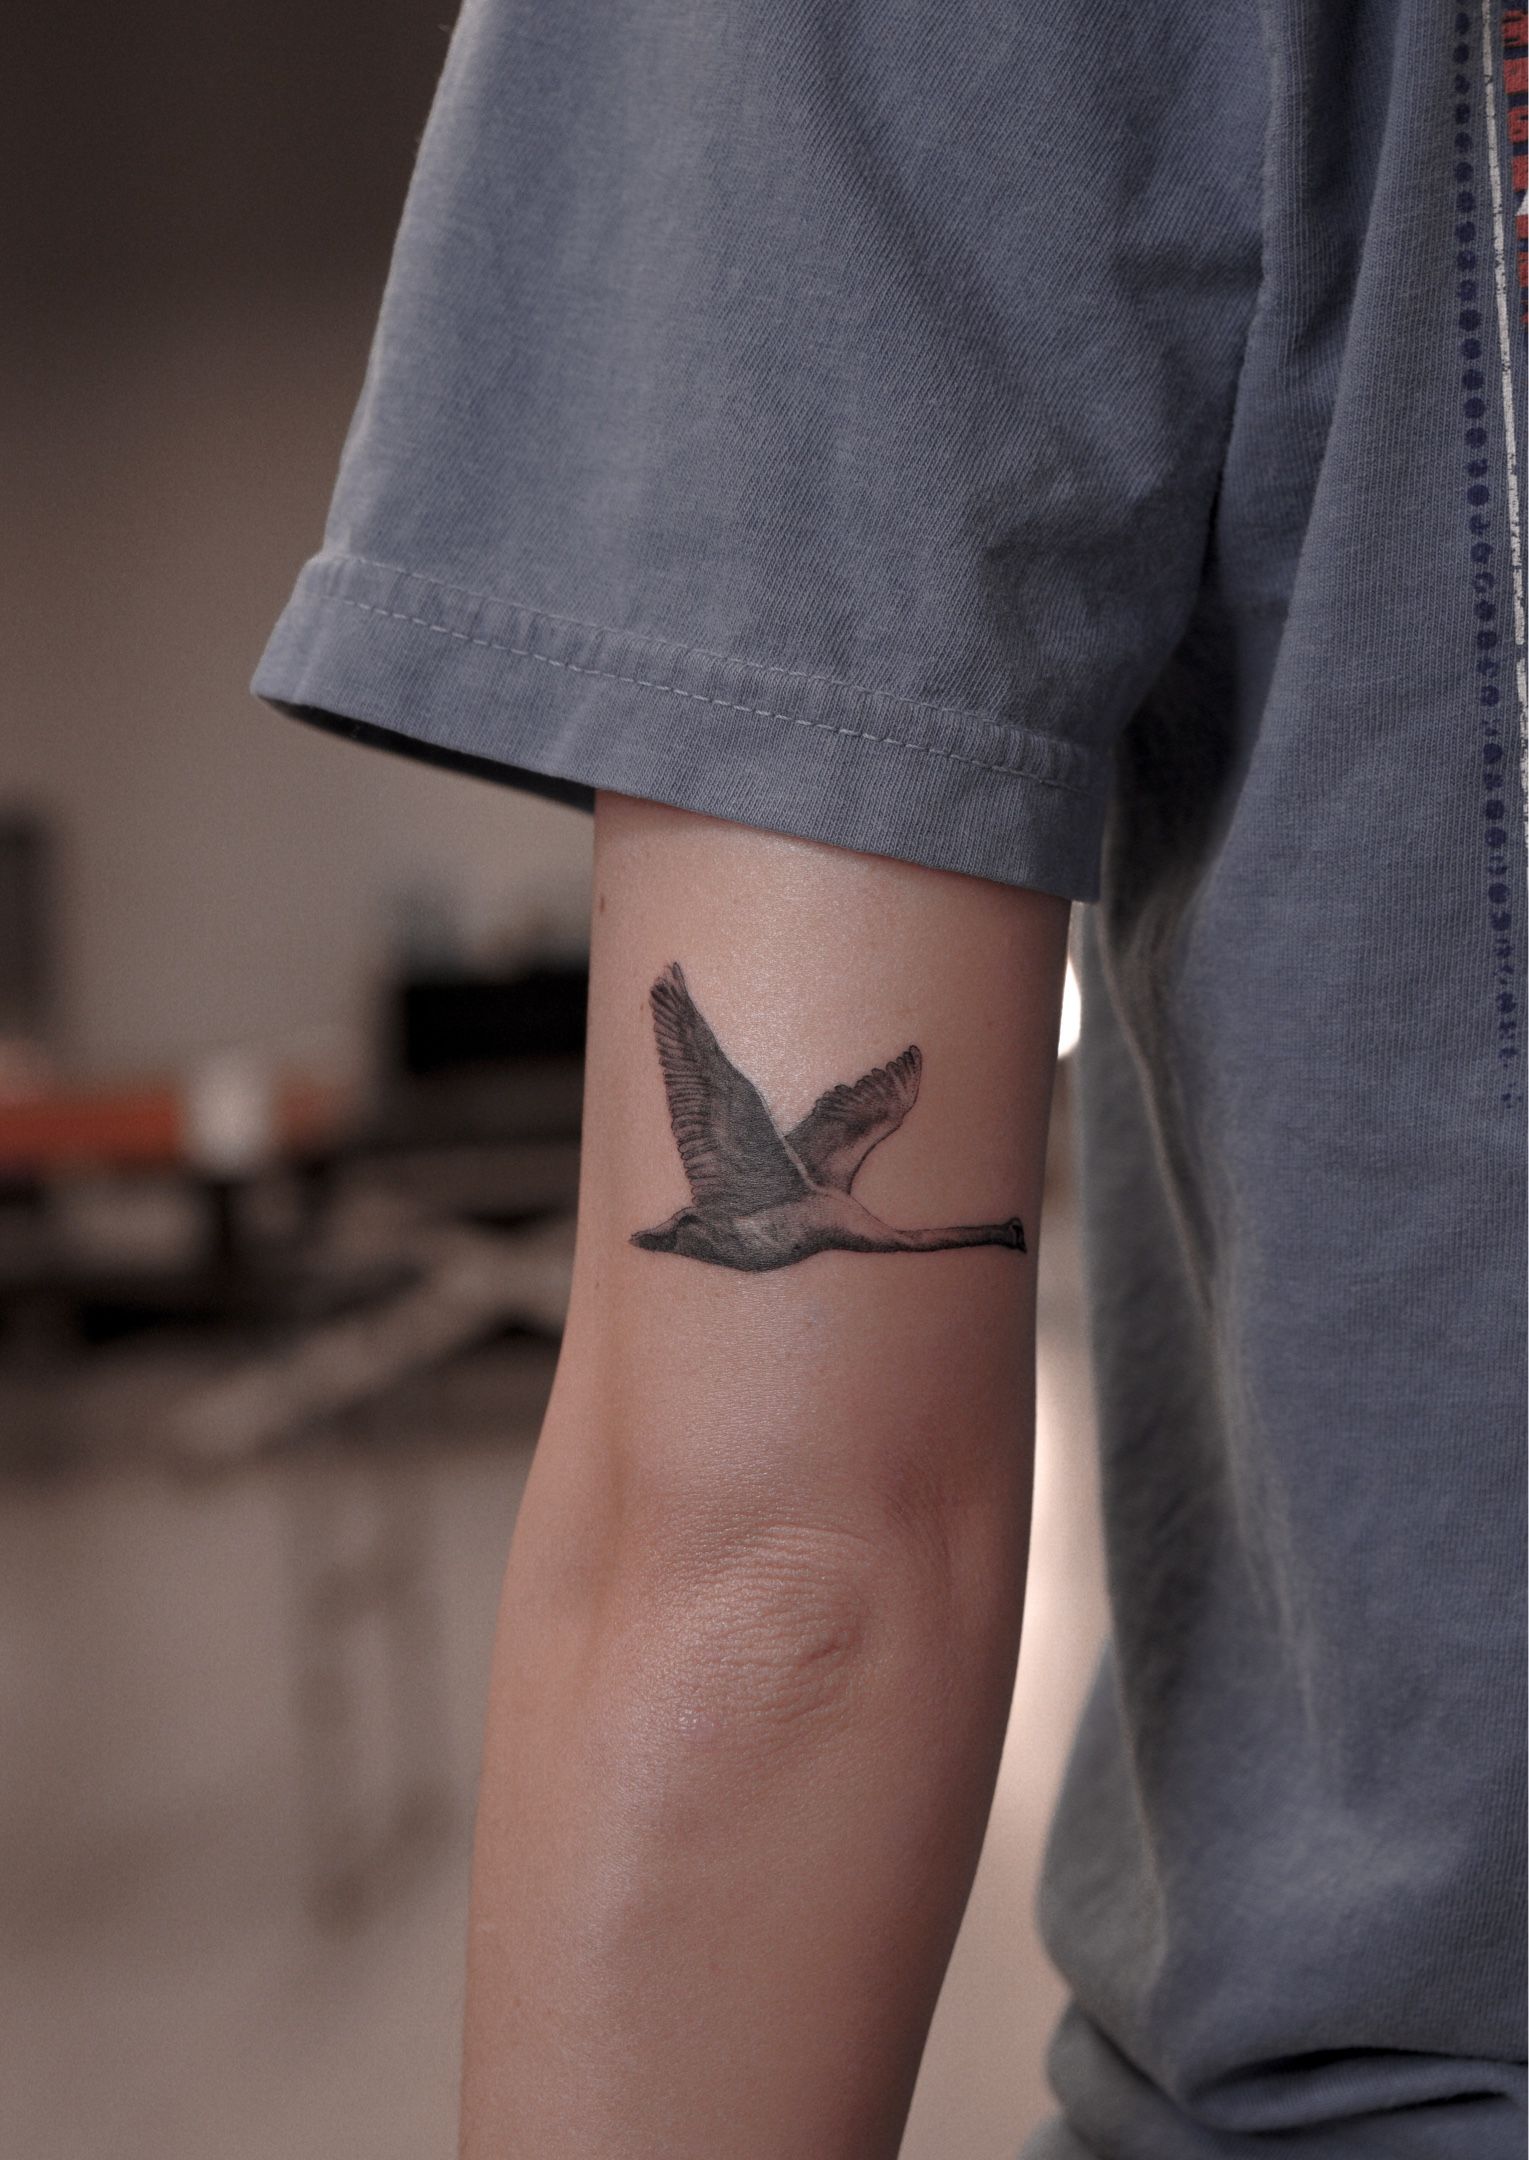 Goose tattoos  Goose tattoo Discreet tattoos Small matching tattoos